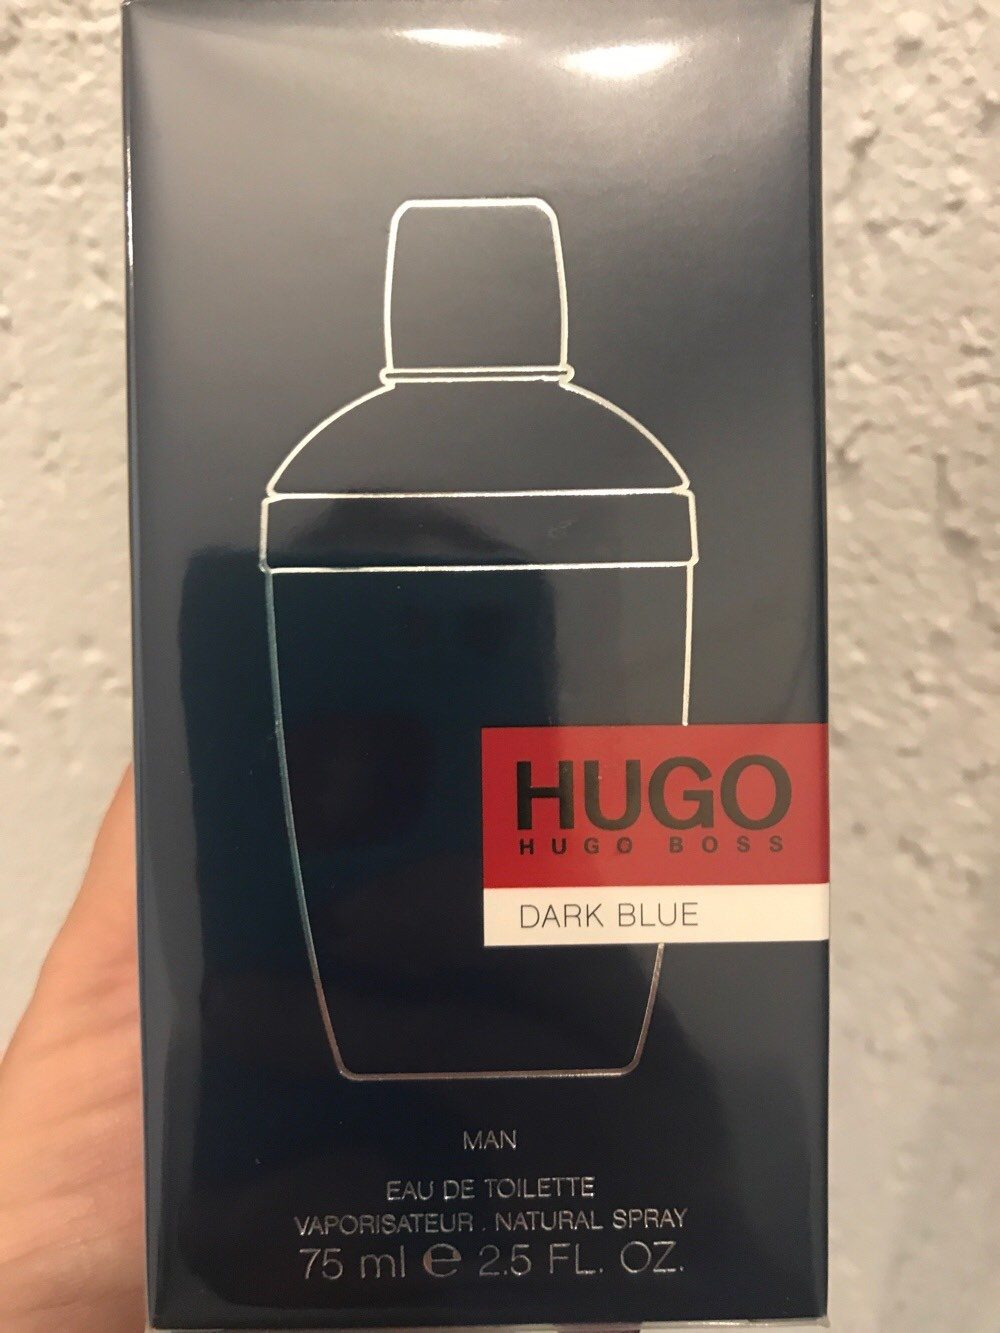 Hugo Boss dark Blue - Produit - de